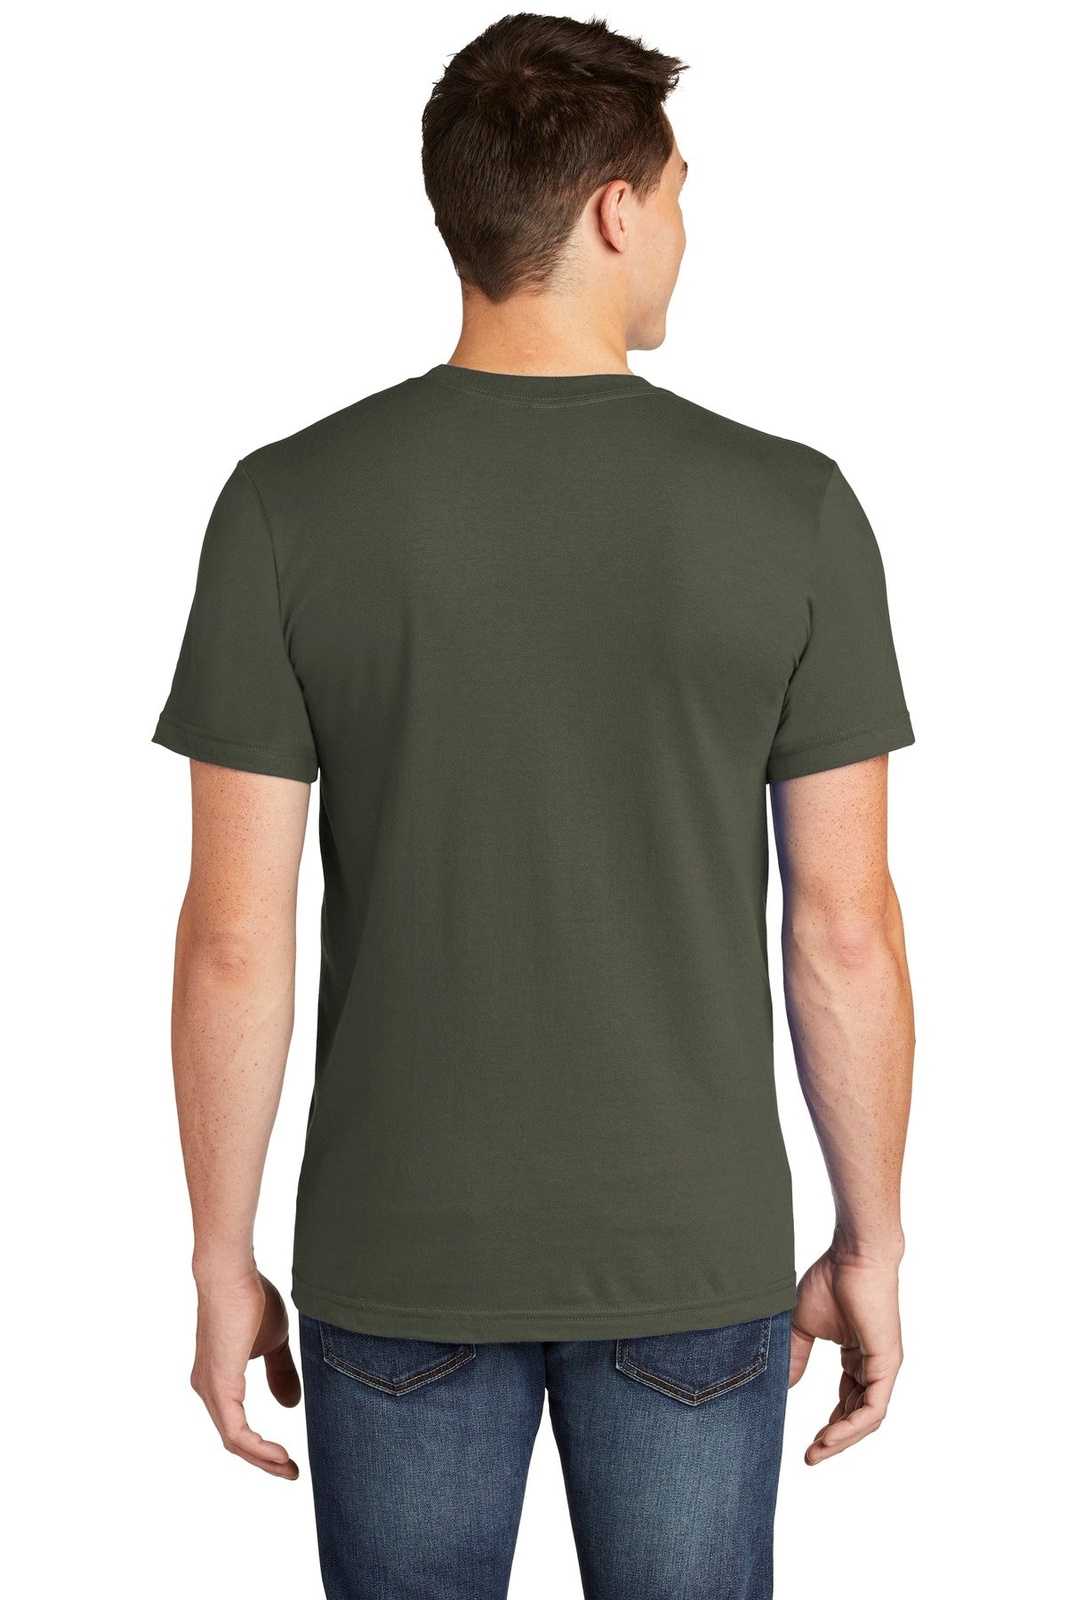 American Apparel 2001W Fine Jersey T-Shirt - Lieutenant - HIT a Double